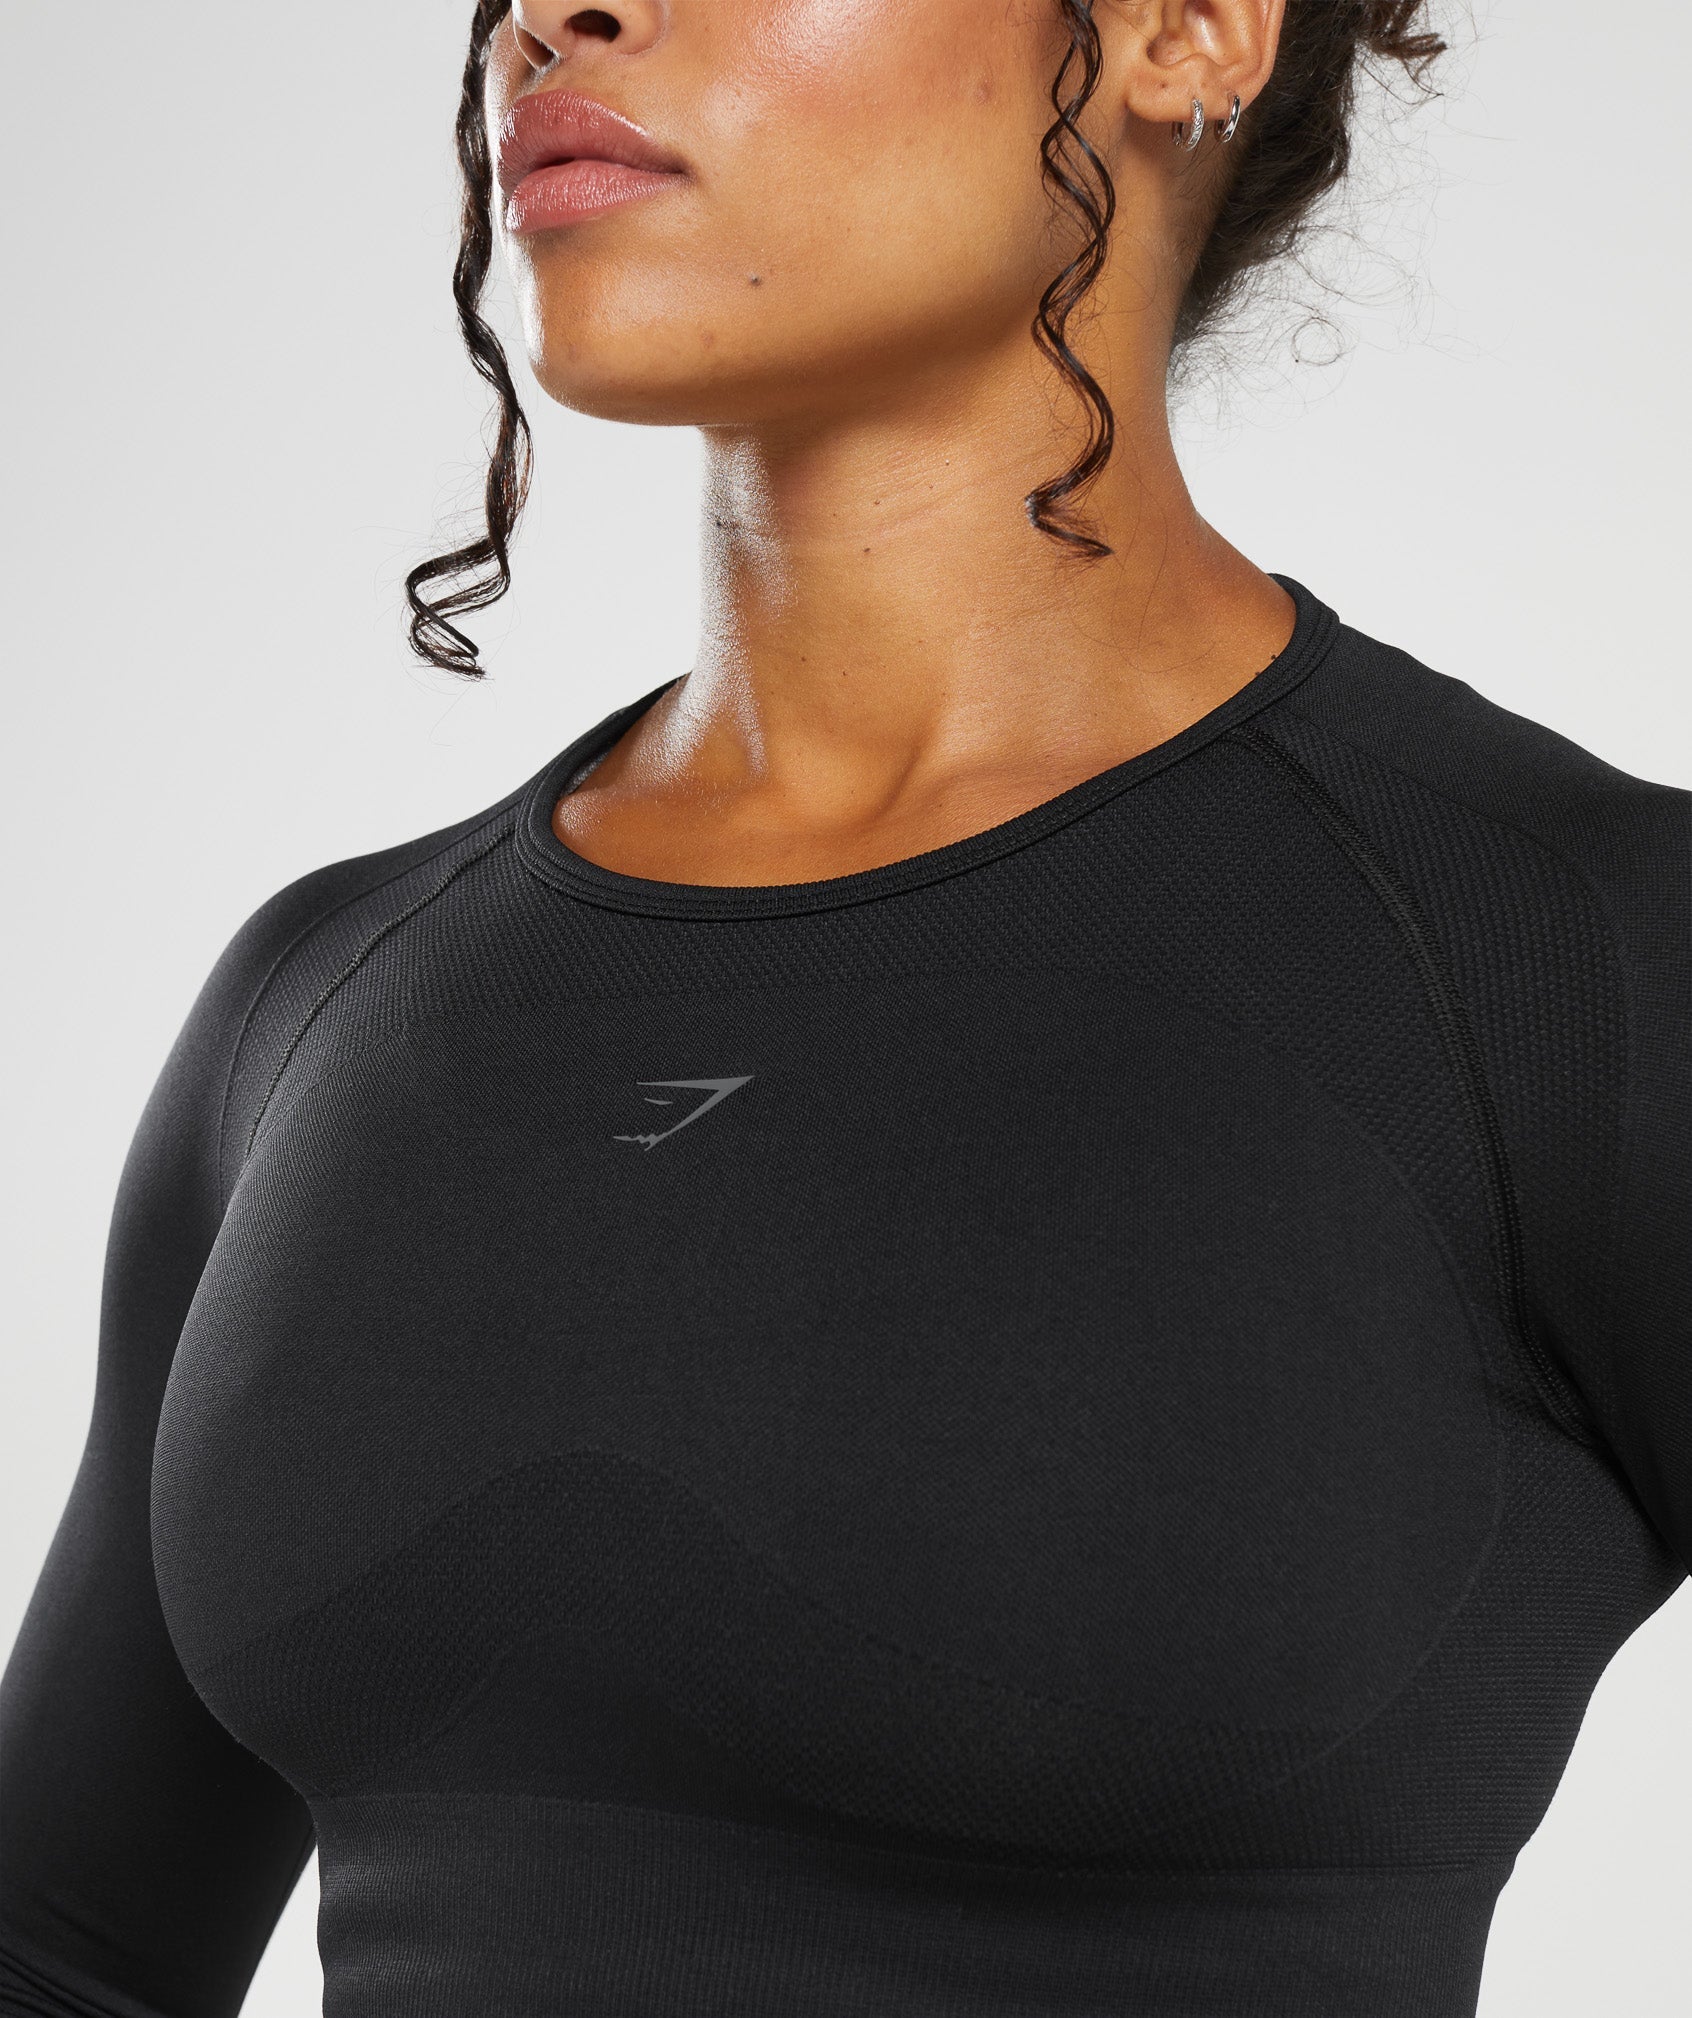 Flex Sports Long Sleeve Crop Top in Black